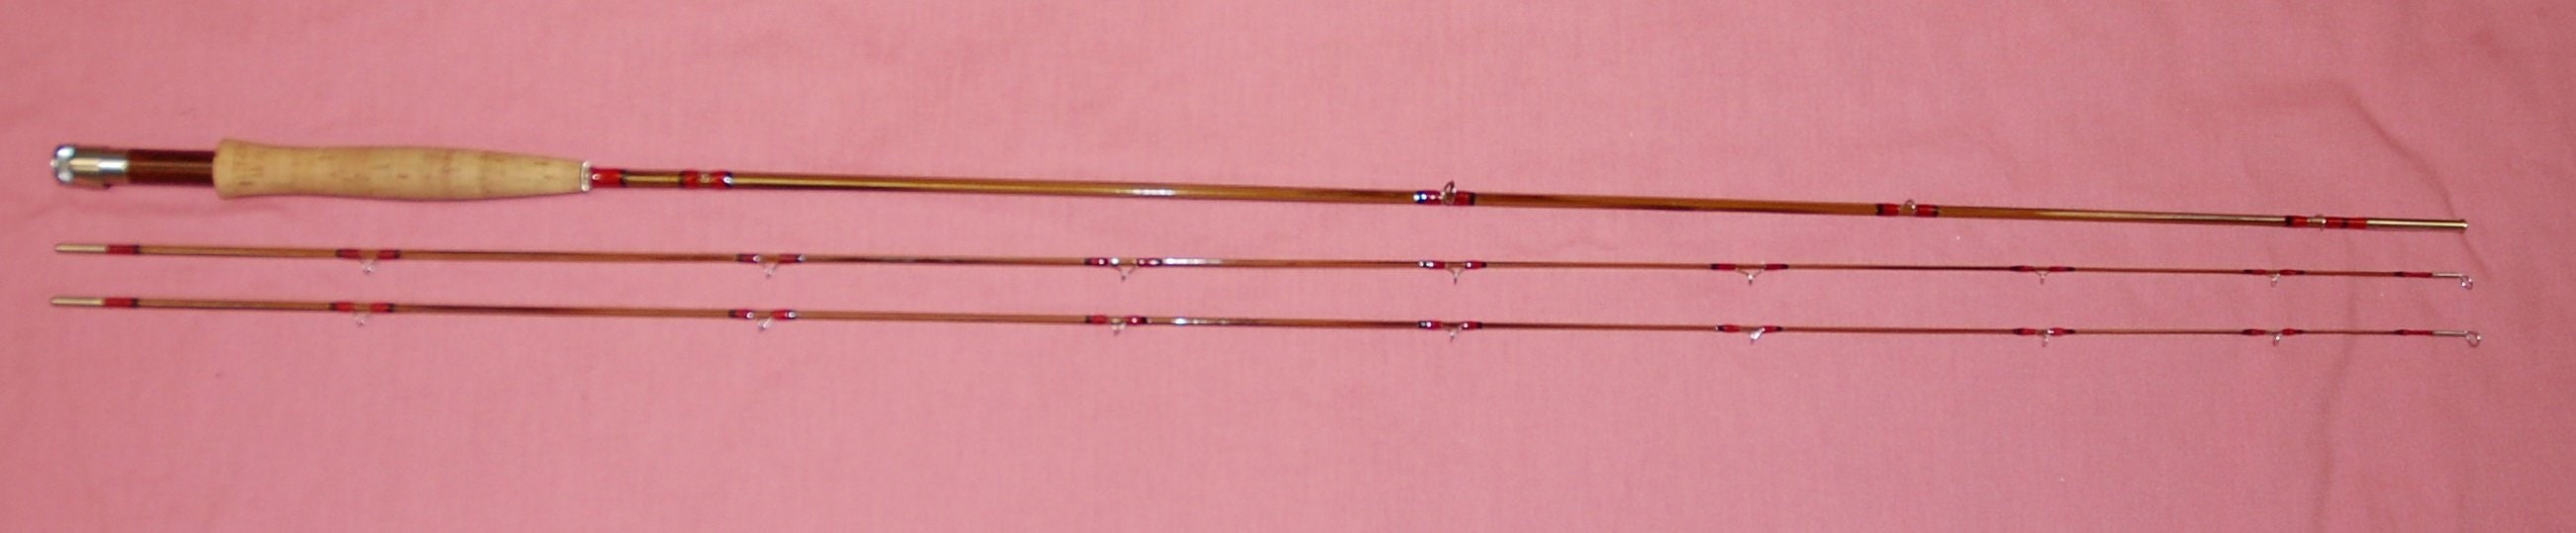 Payne 100 Bamboo Vintage Fly Rod Reproduction -  UK